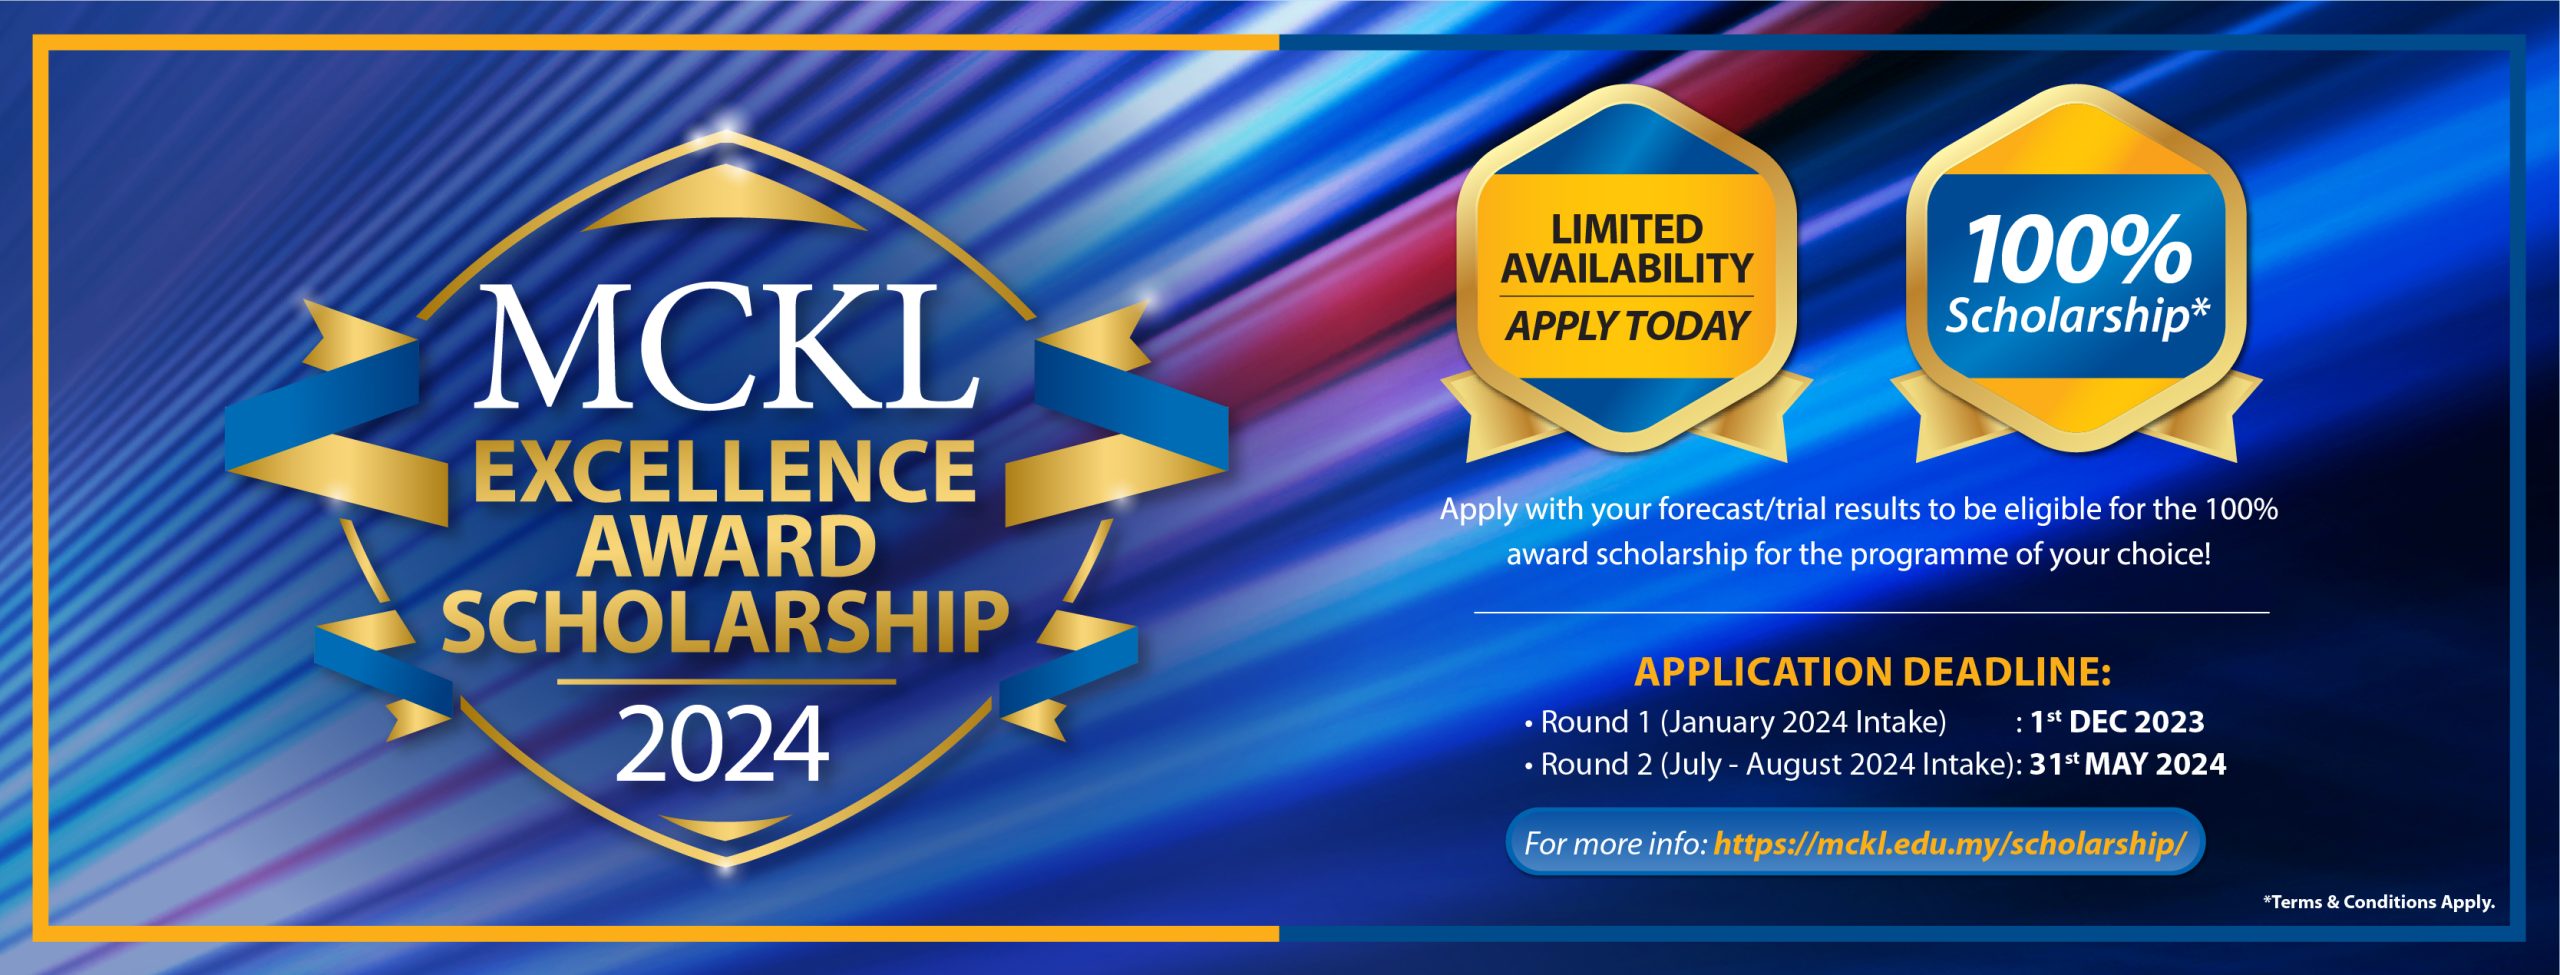 MCKL Excellence Award Scholarship 2024 – applications now open!